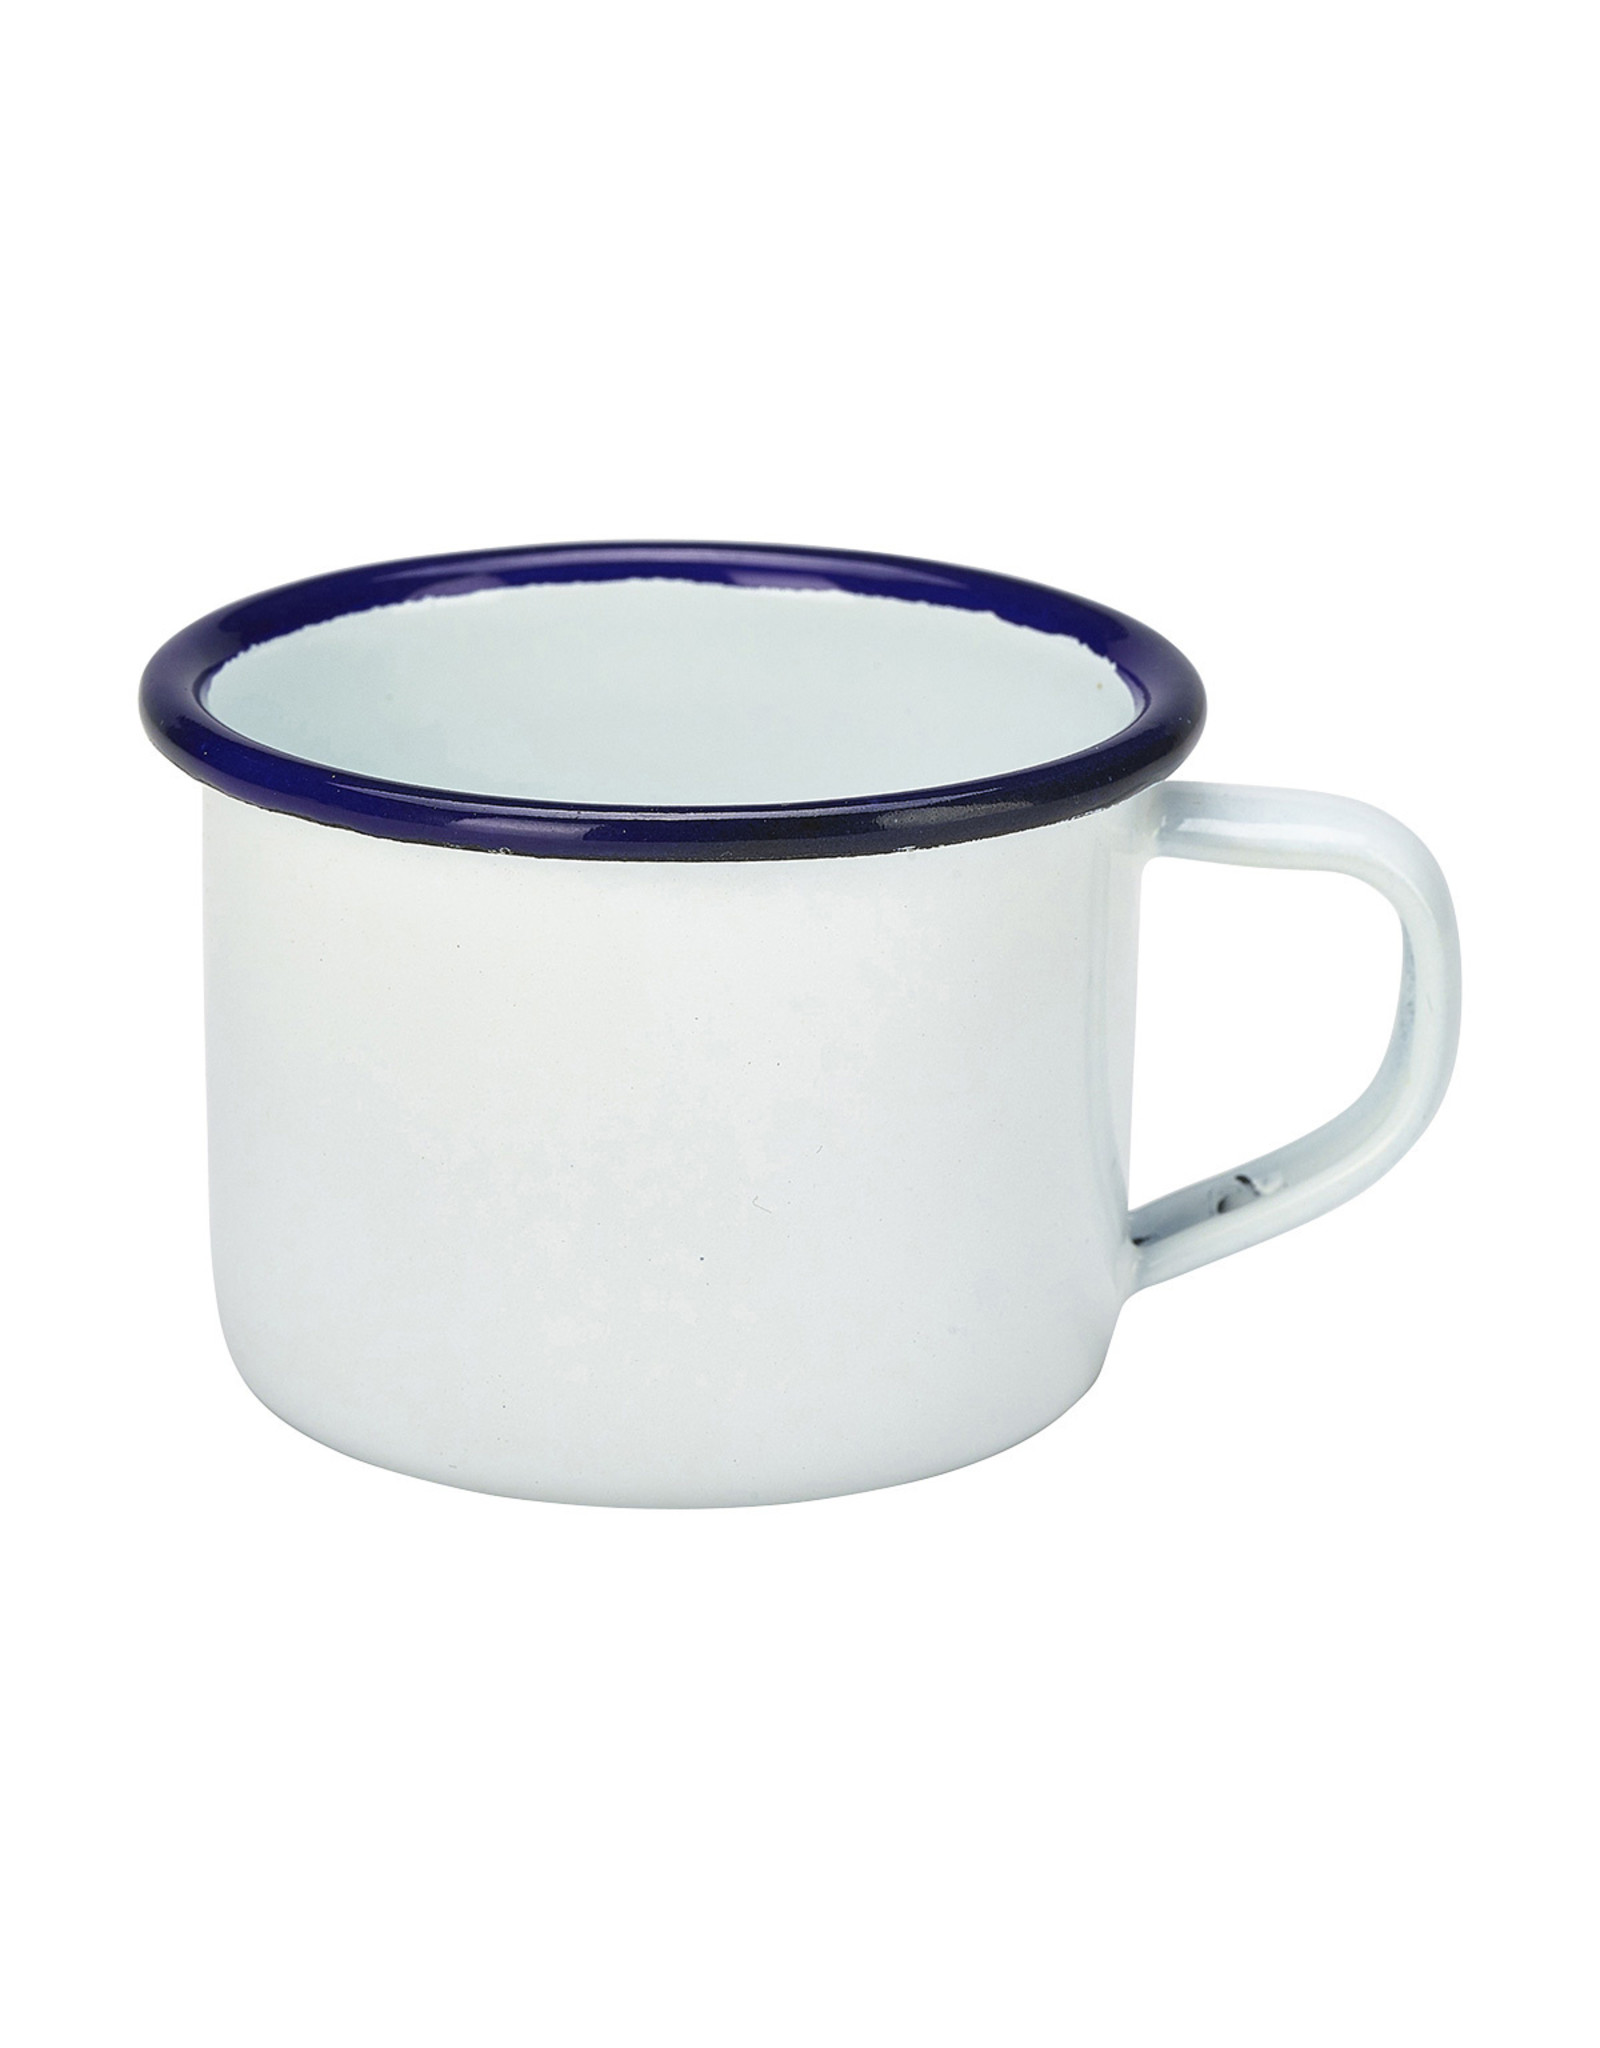 Stylepoint Enamel mini mug with blue rim 120 ml